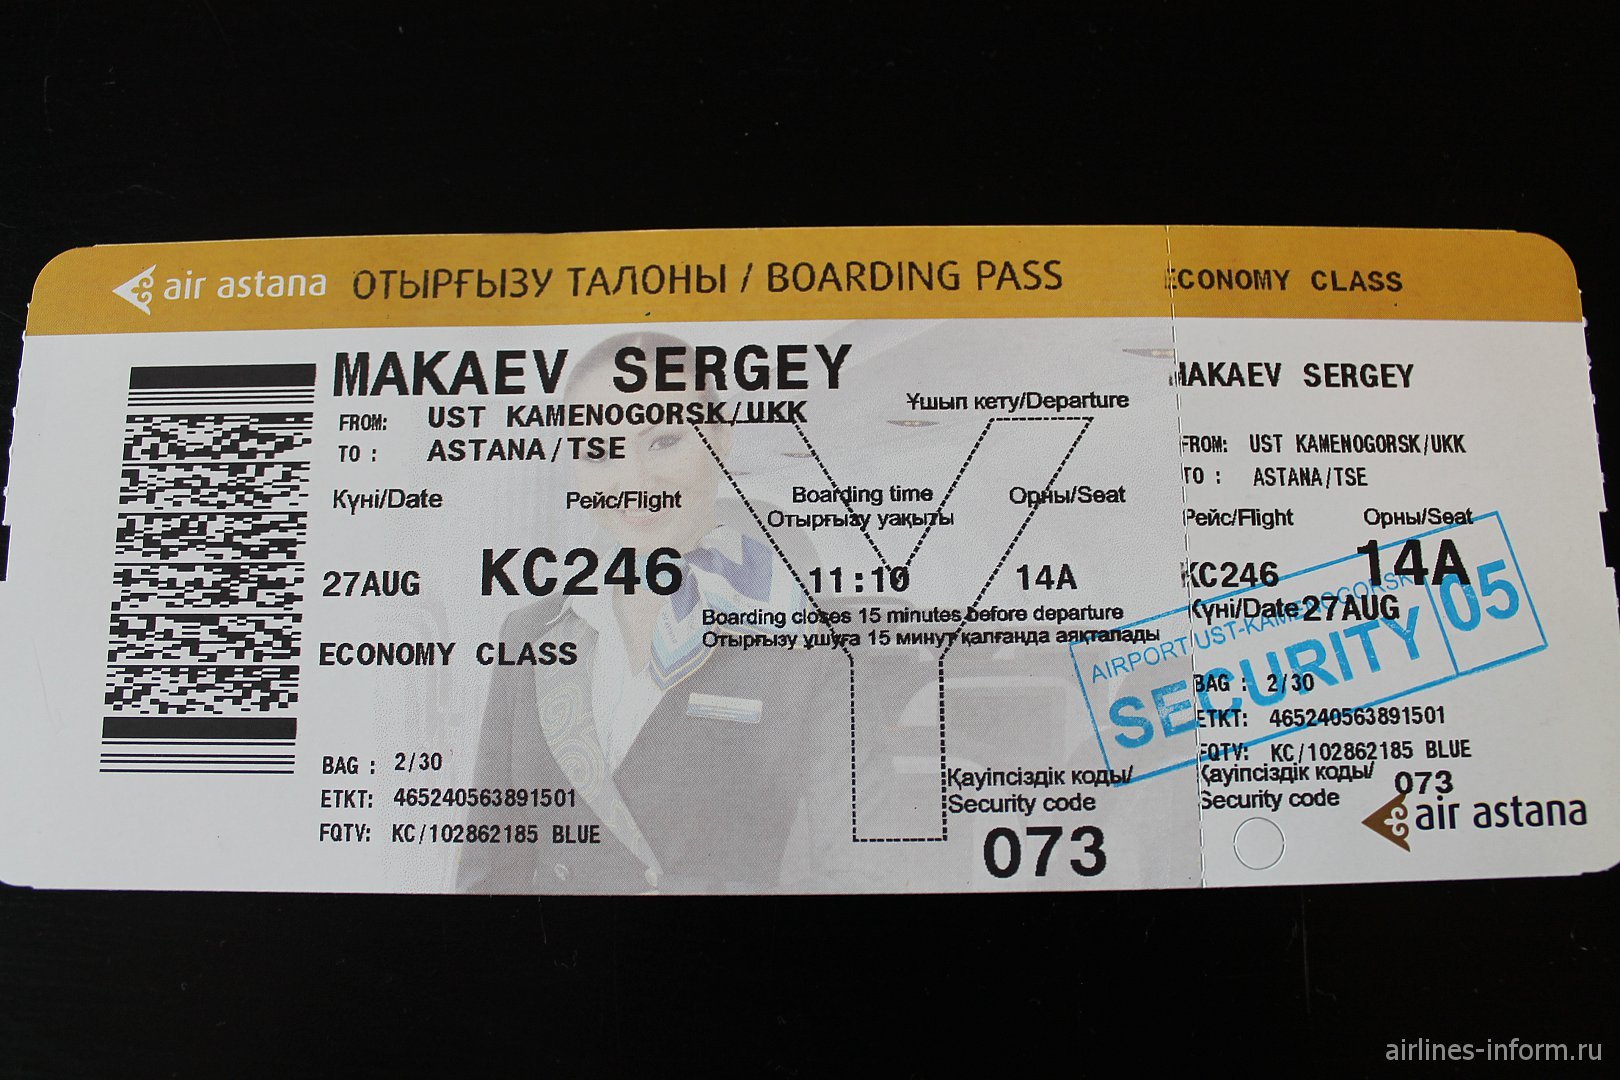 Аир билет на самолет. Алматы самолет билеты. Билет в Астану. Билет Москва Казахстан самолет. Air Astana посадочный талон на самолет.